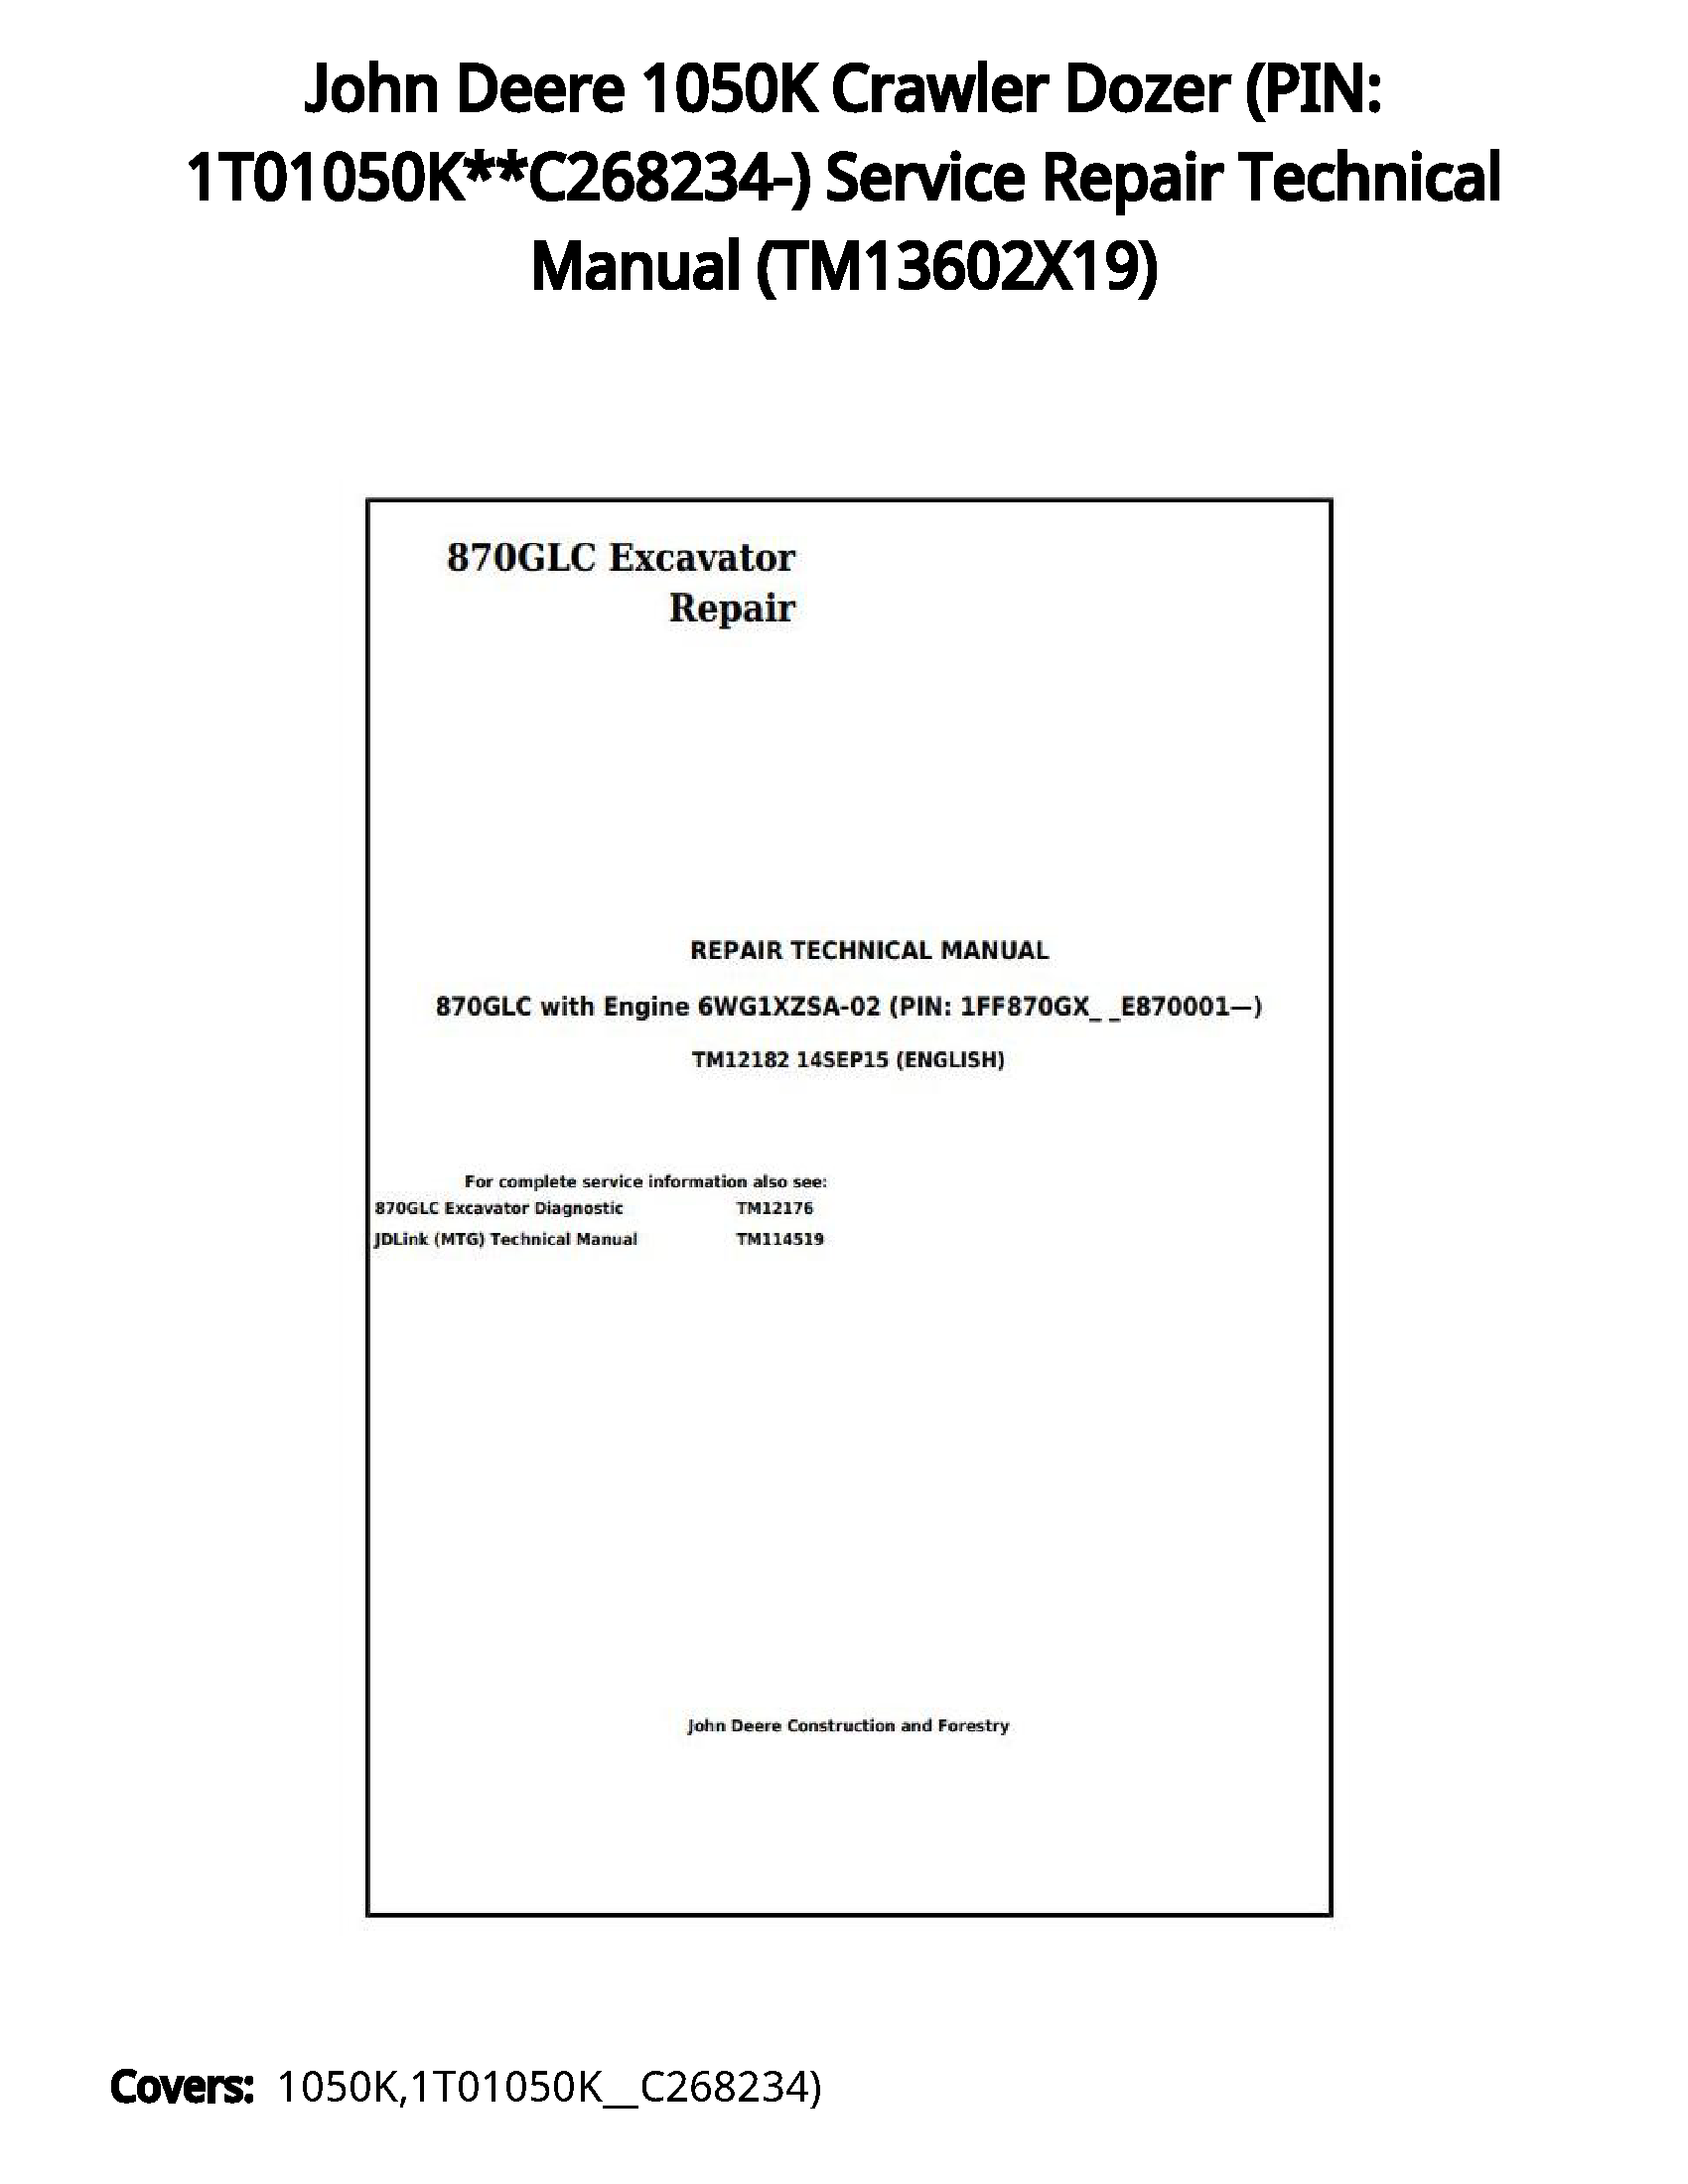 John Deere 1050K Crawler Dozer (PIN: 1T01050K**C268234-) Service Repair Technical Manual - TM13602X19